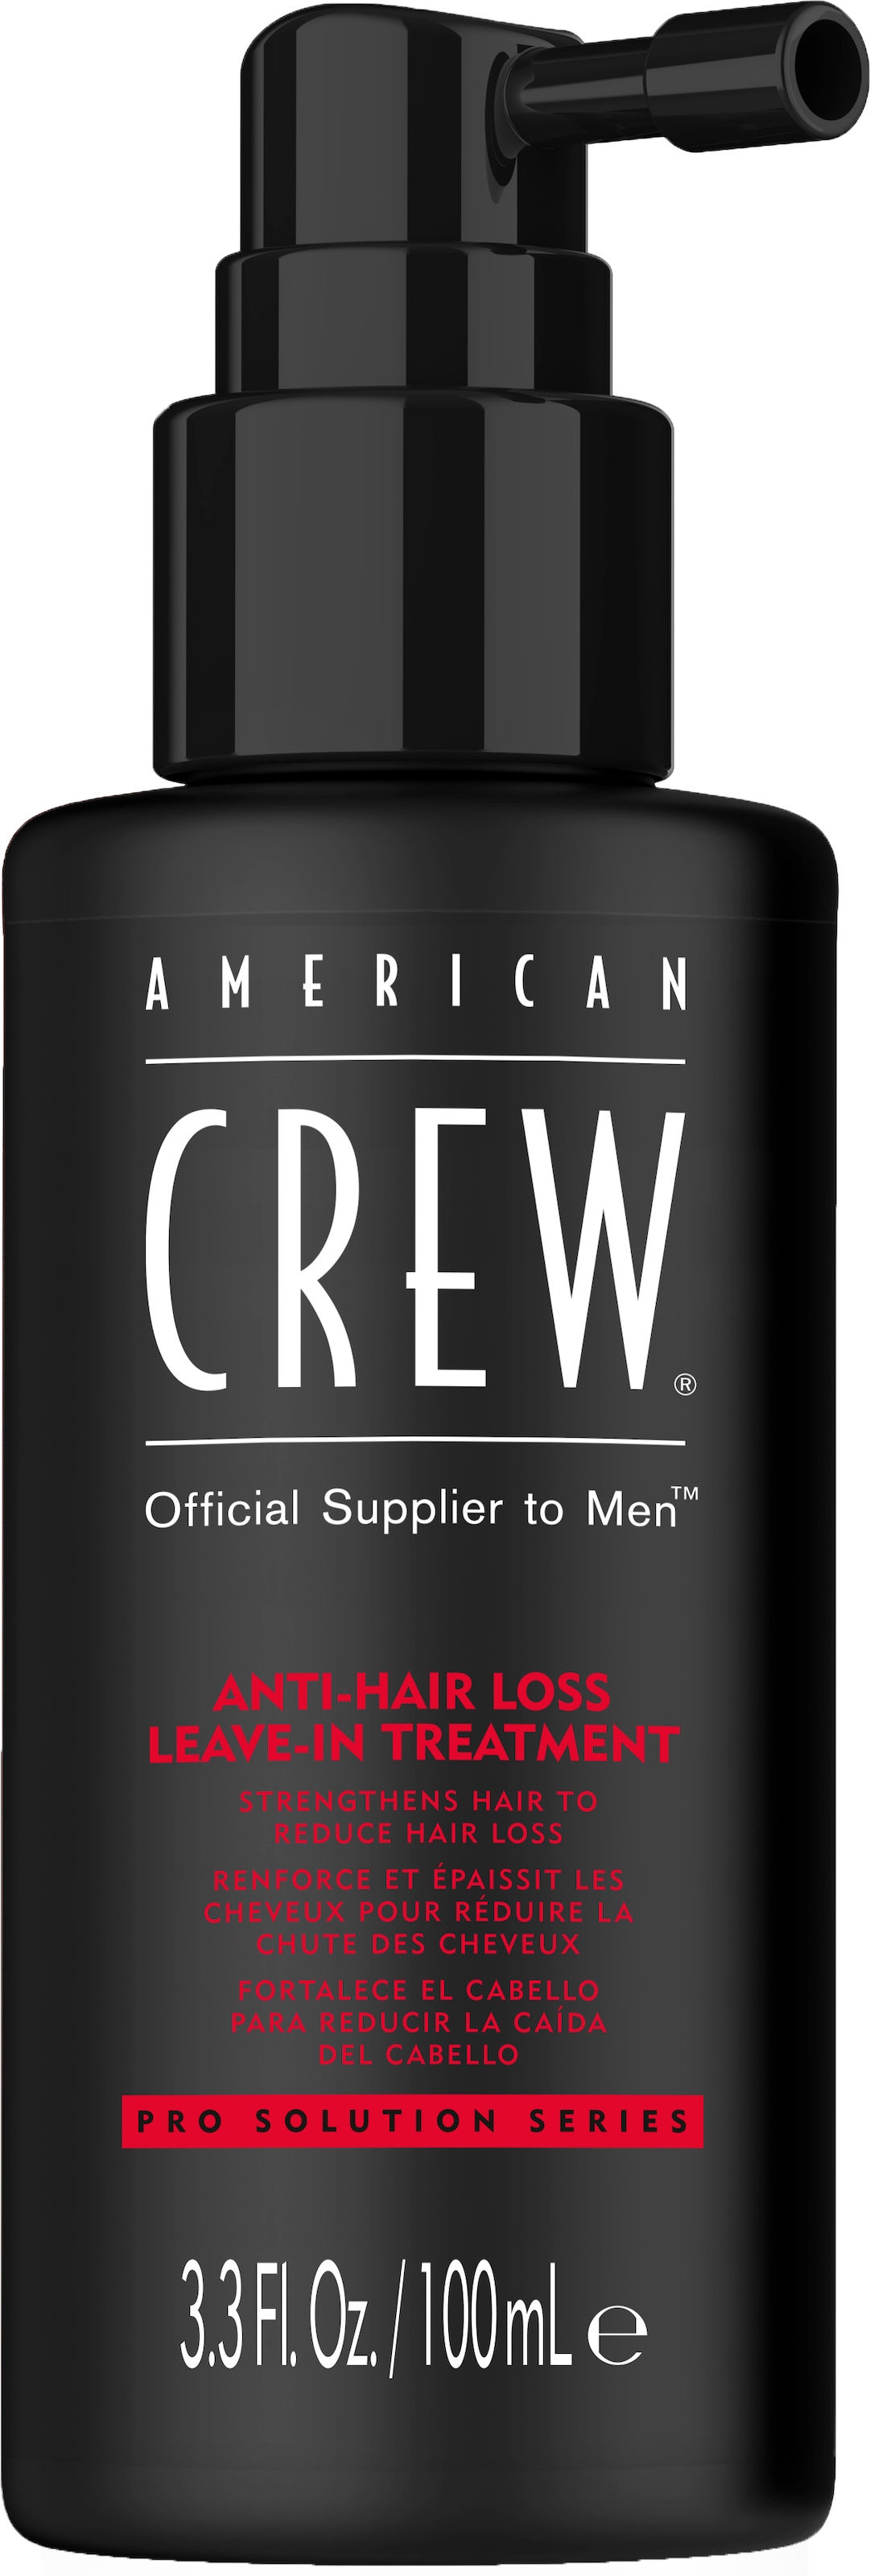 American Crew Leave-in Pflege »Anti-Hair Loss Treatm...